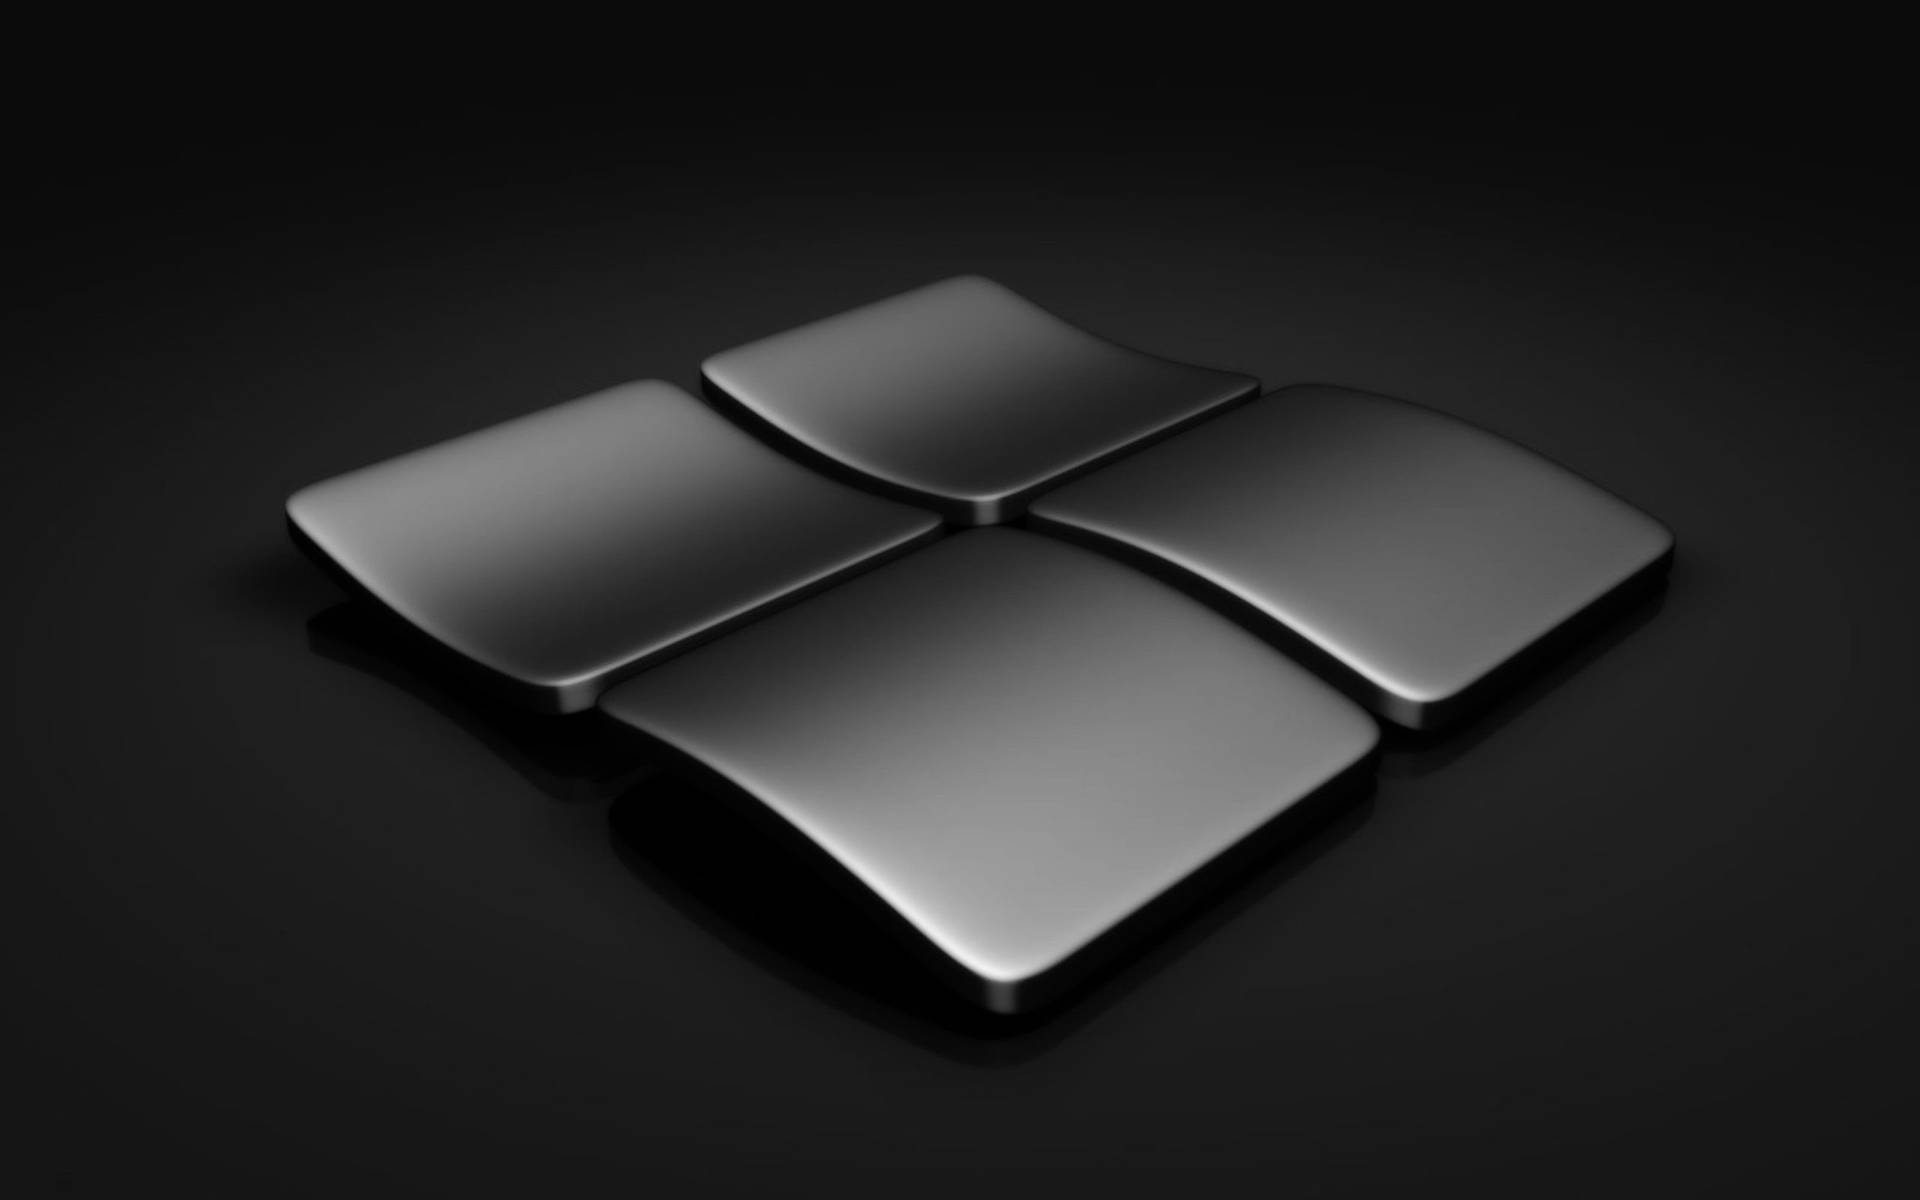 Top 999+ Black Windows 10 Hd Wallpapers Full HD, 4K✅Free to Use